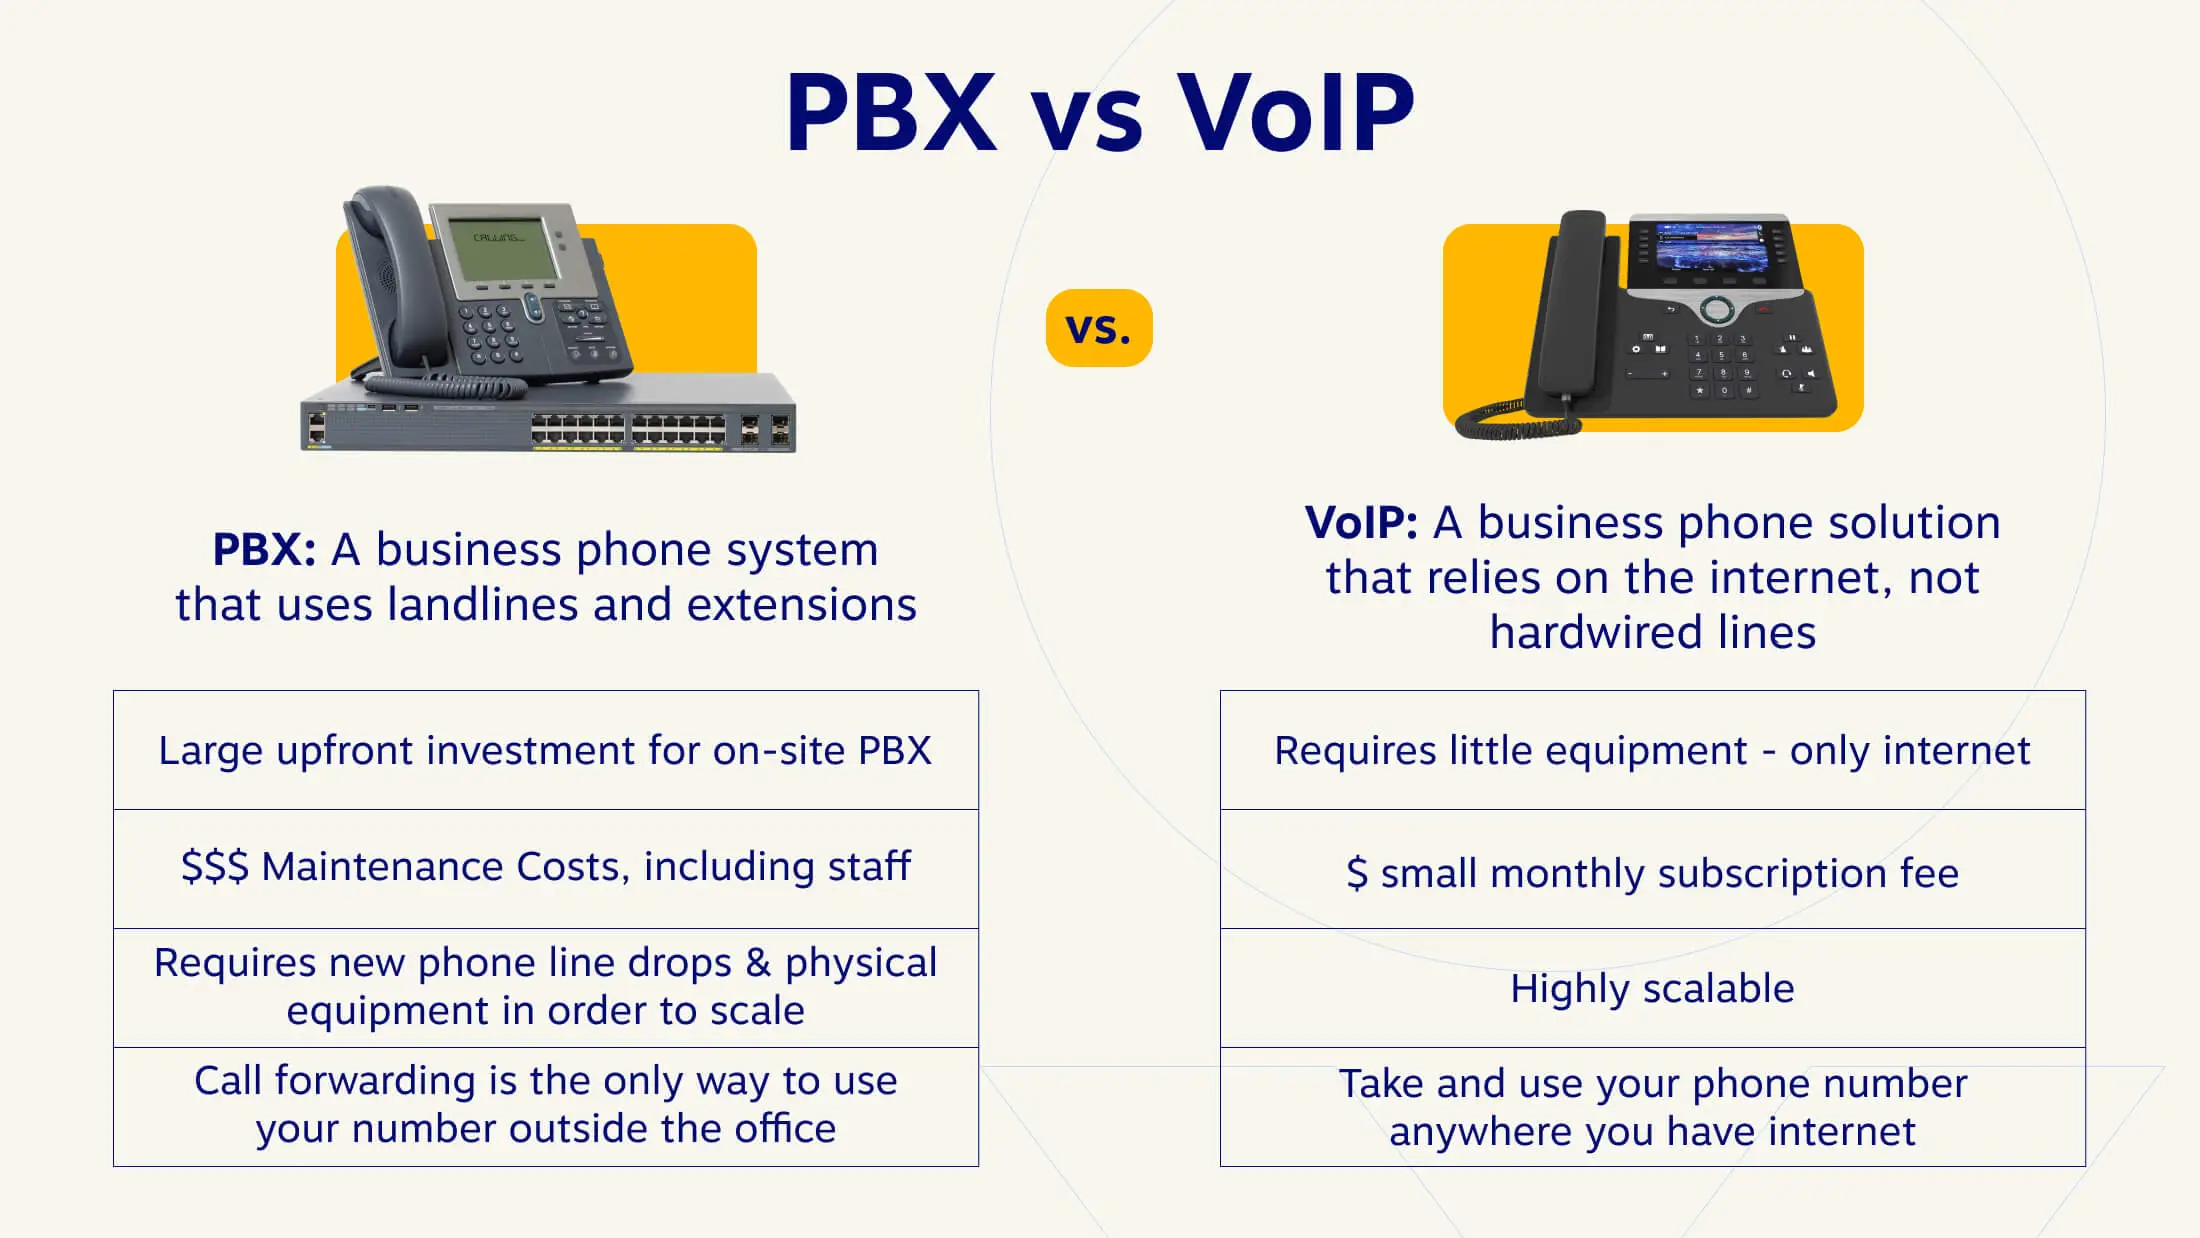 PBX VoIP 使用固定電話和分機的商務電話系統 依賴互聯網而不是硬連線的商務電話解決方案 現場 PBX 的大量前期投資 需要很少的設備 - 僅互聯網 $$$ 維護成本，包括員工 $ 每月少量訂閱費用需要新的電話線路和實體設備才能擴展高度可擴展呼叫轉移是在辦公室外使用您的號碼的唯一方法在有互聯網的任何地方都可以使用您的電話號碼